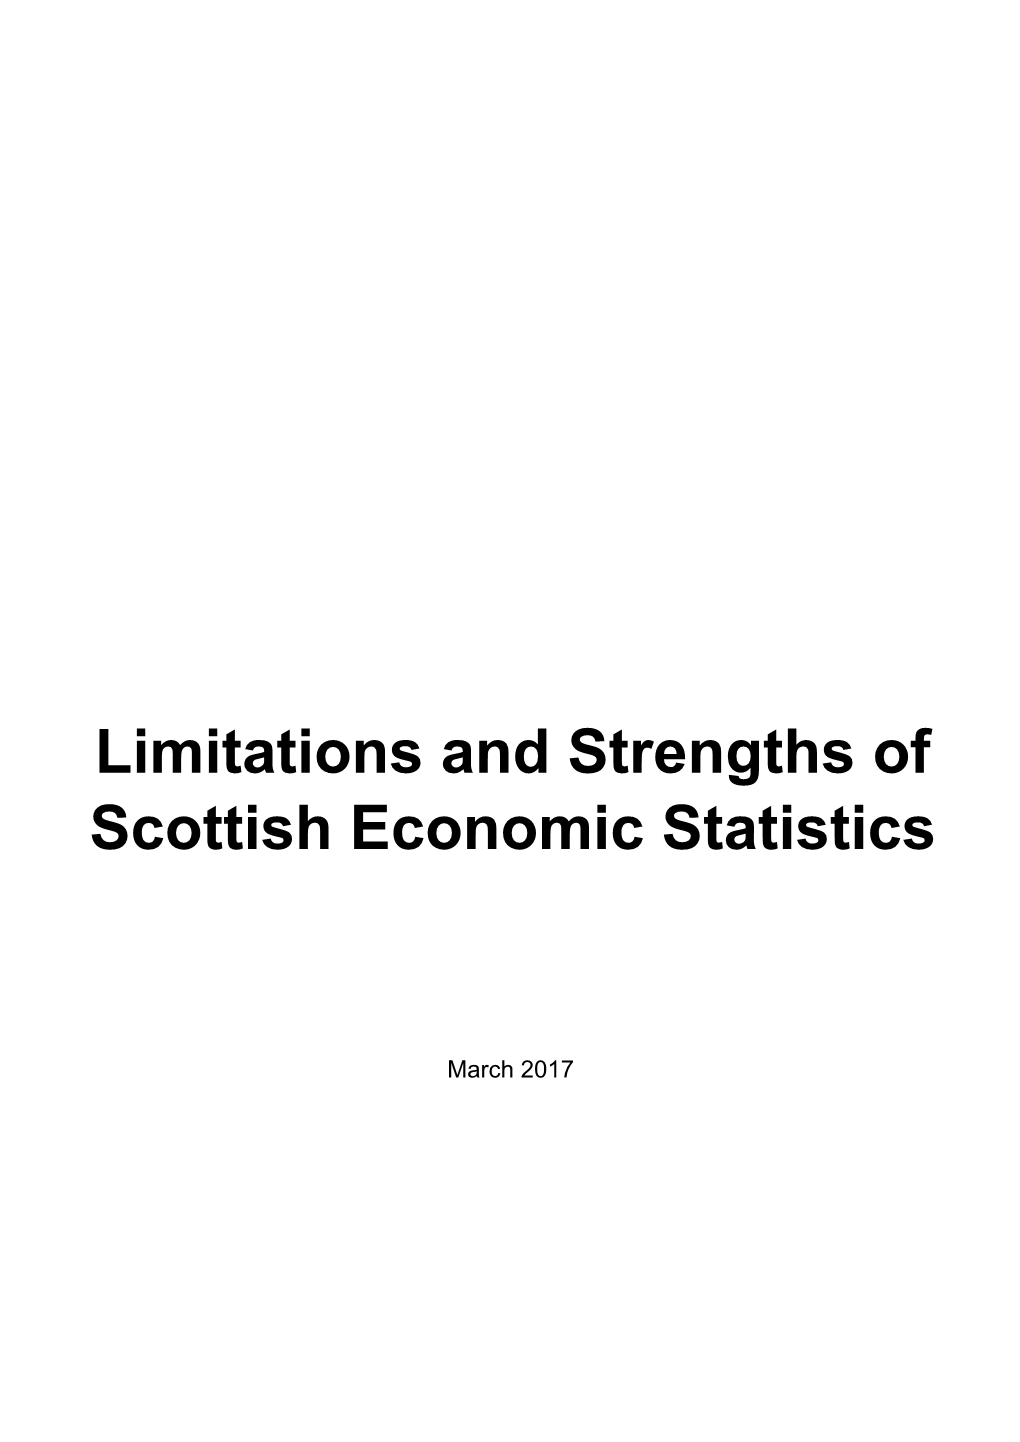 Limitations and Strengths of Scottish Economic Statistics